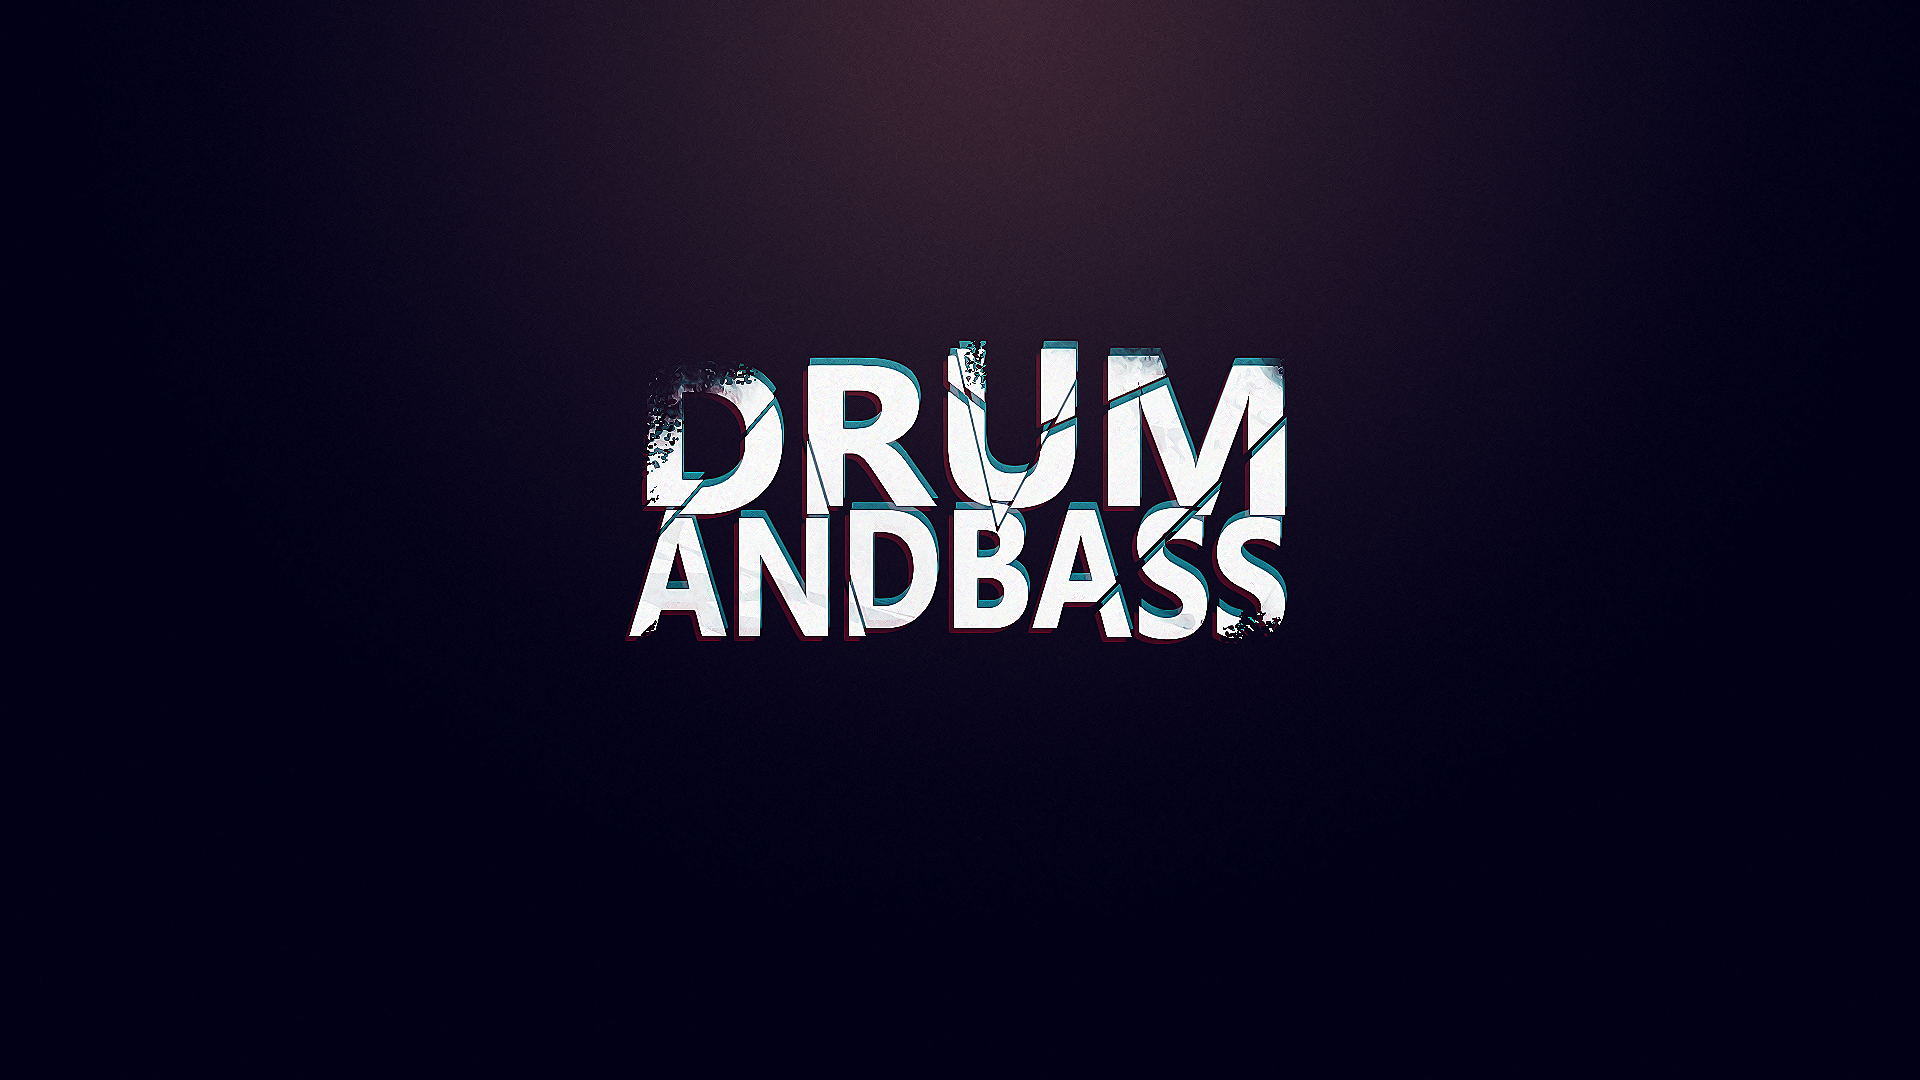 drum n bass, Drum, Bass, Dnb, Electronic, Drum and bass Wallpaper